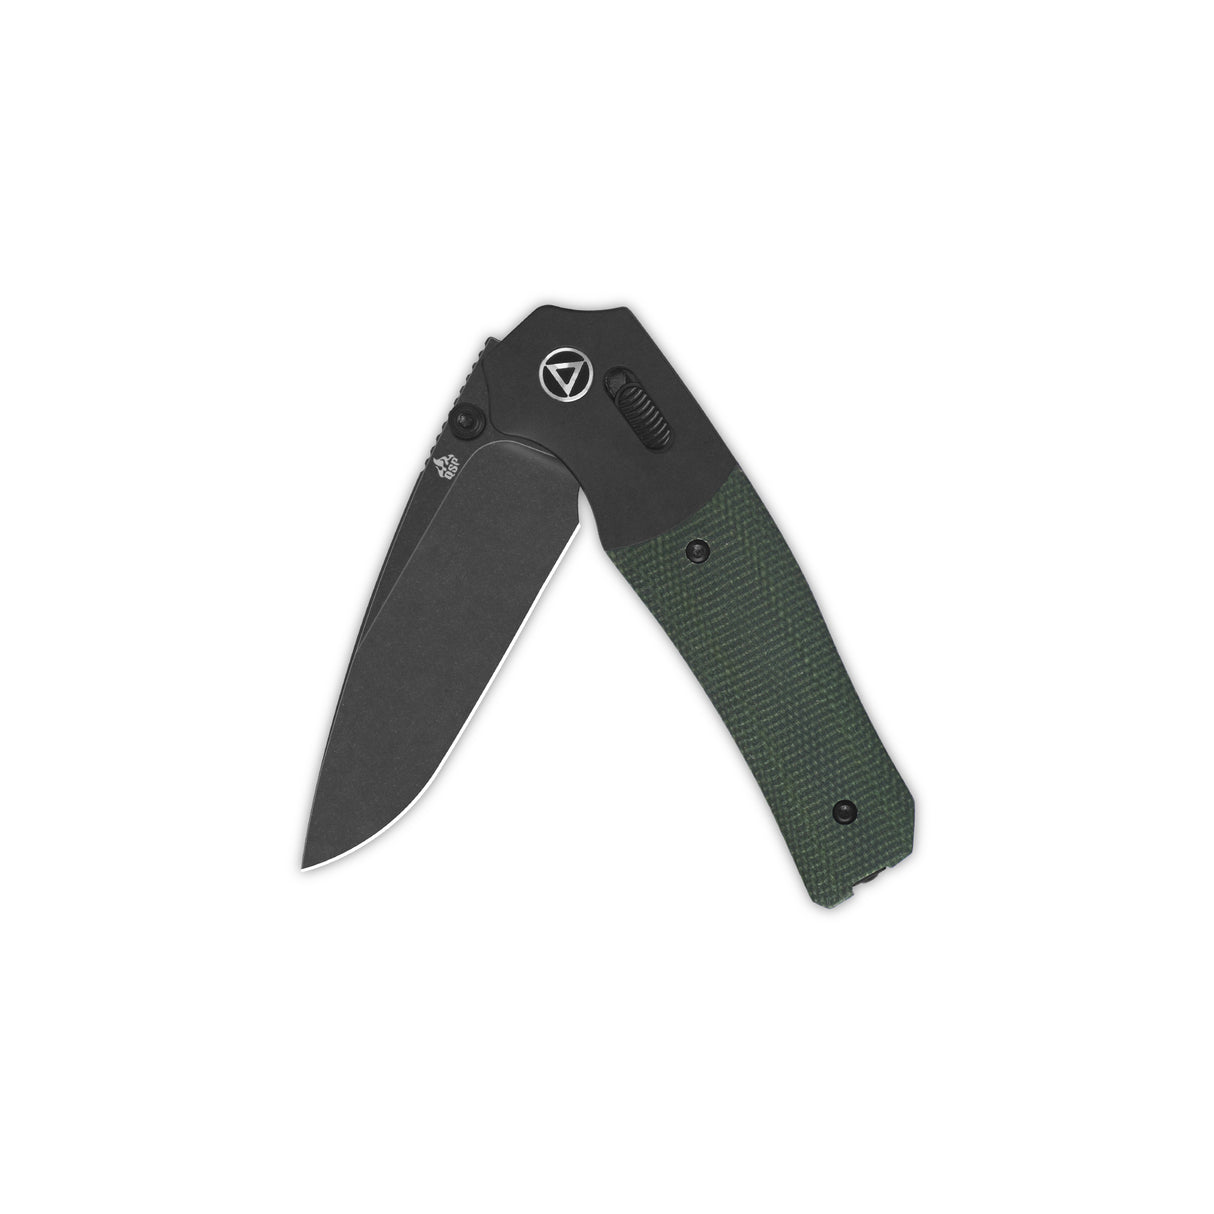 QSP Vault GlydeLock Pocket Knife 14C28N Blade Green Micarta Handle